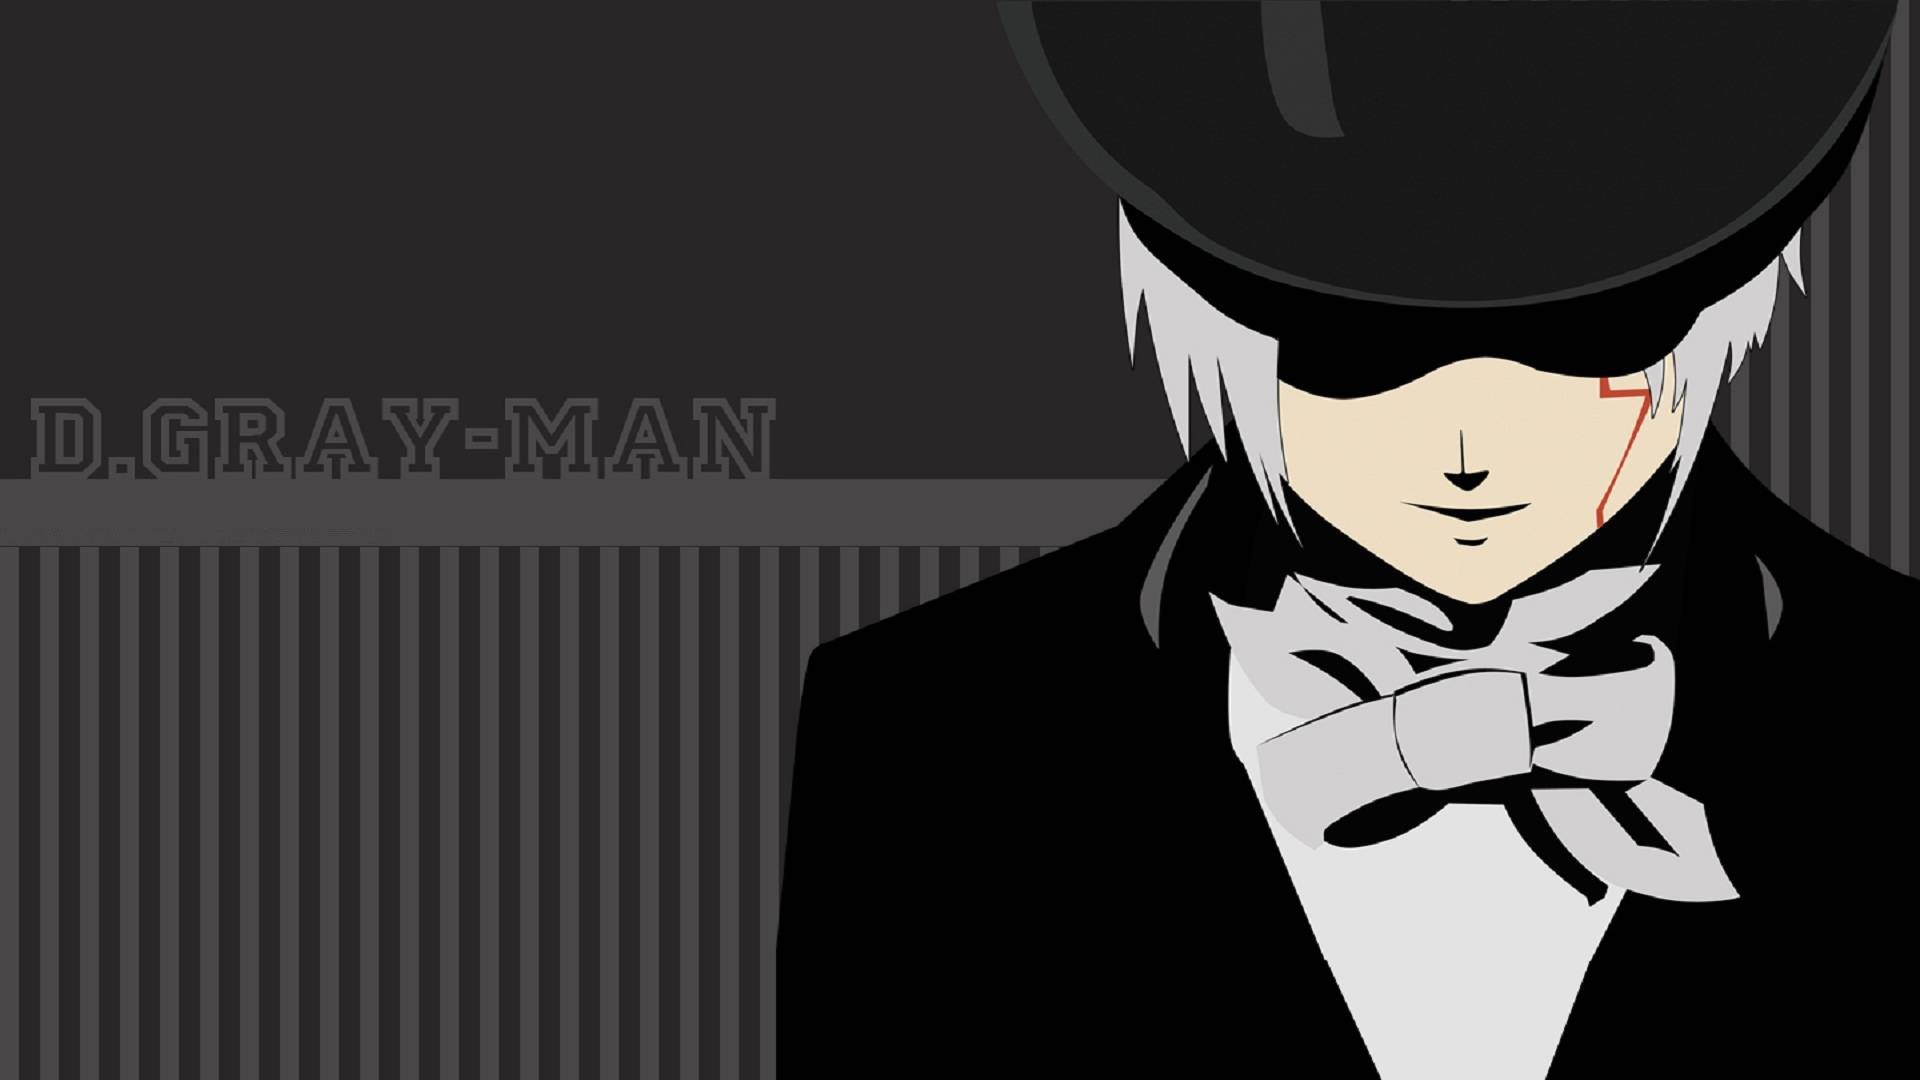 1920x1080 Cool D Gray Man Background.